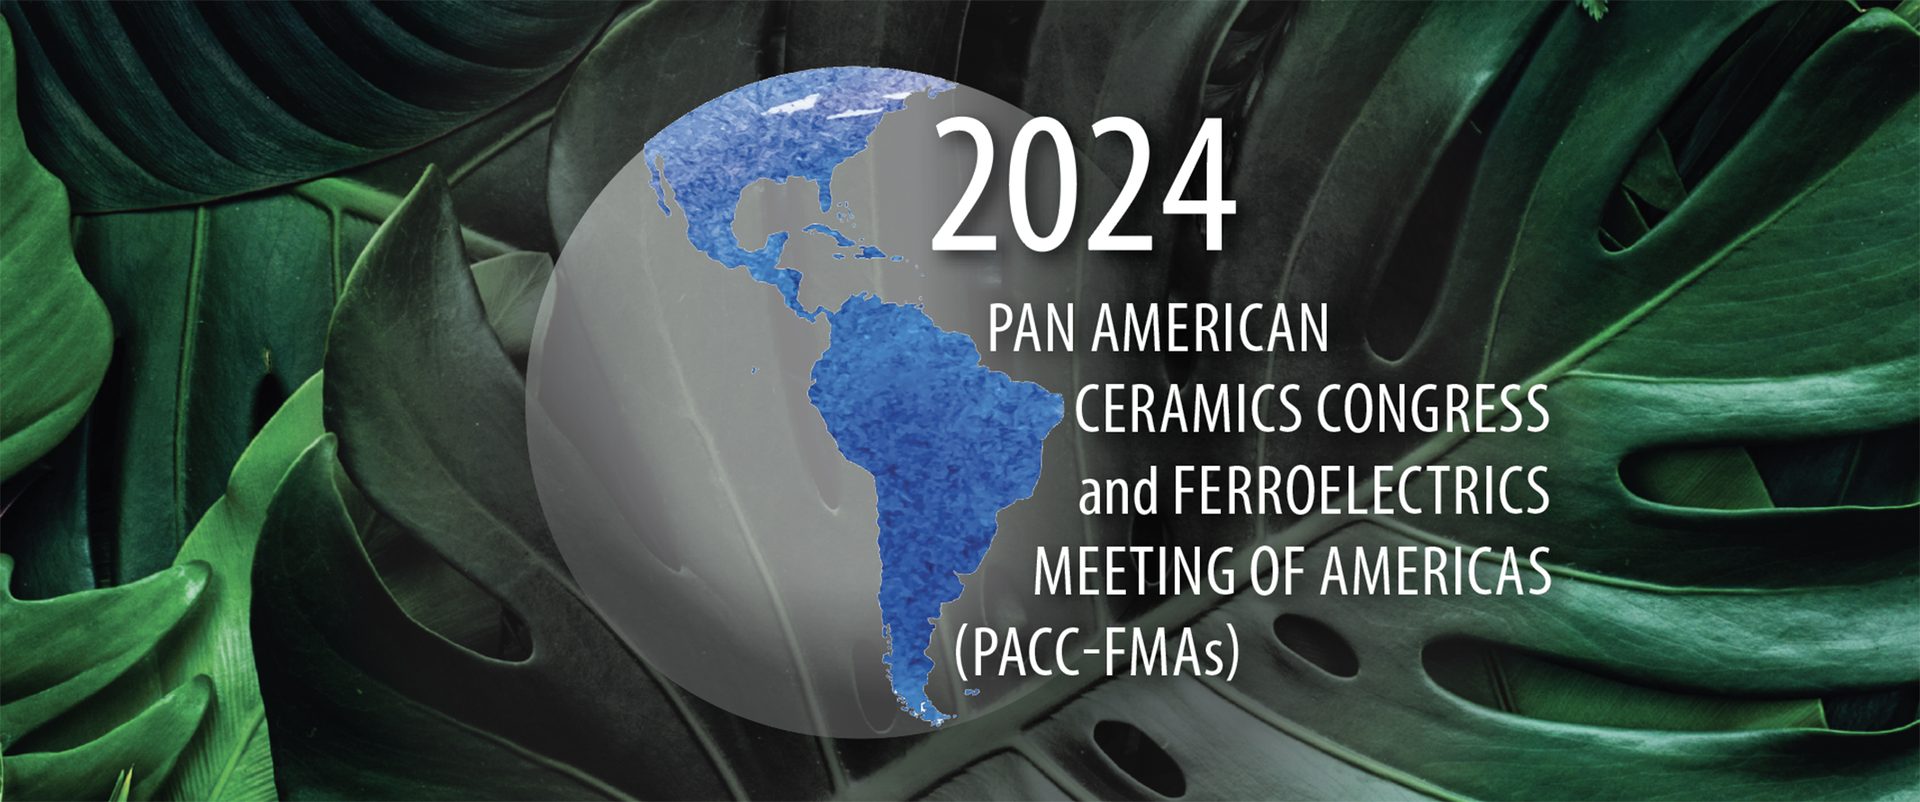 Pan American Ceramics Congress and Ferroelectrics Meeting of Americas (PACC-FMAs)